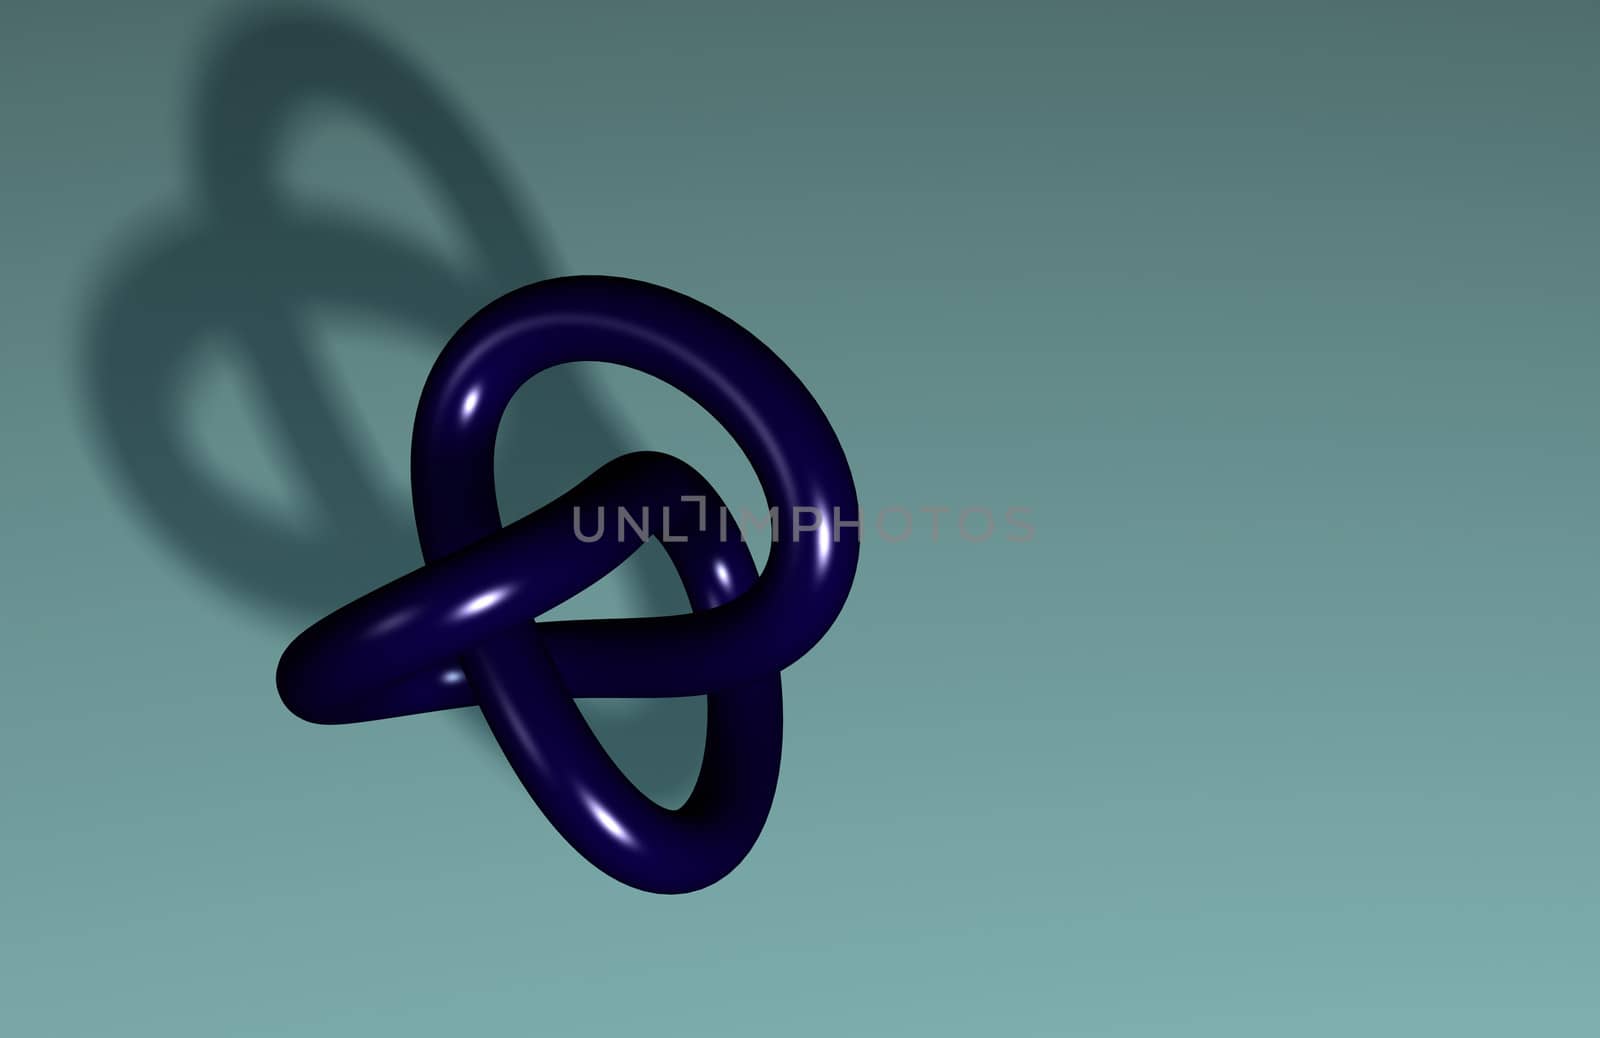 blue torus made in 3d software